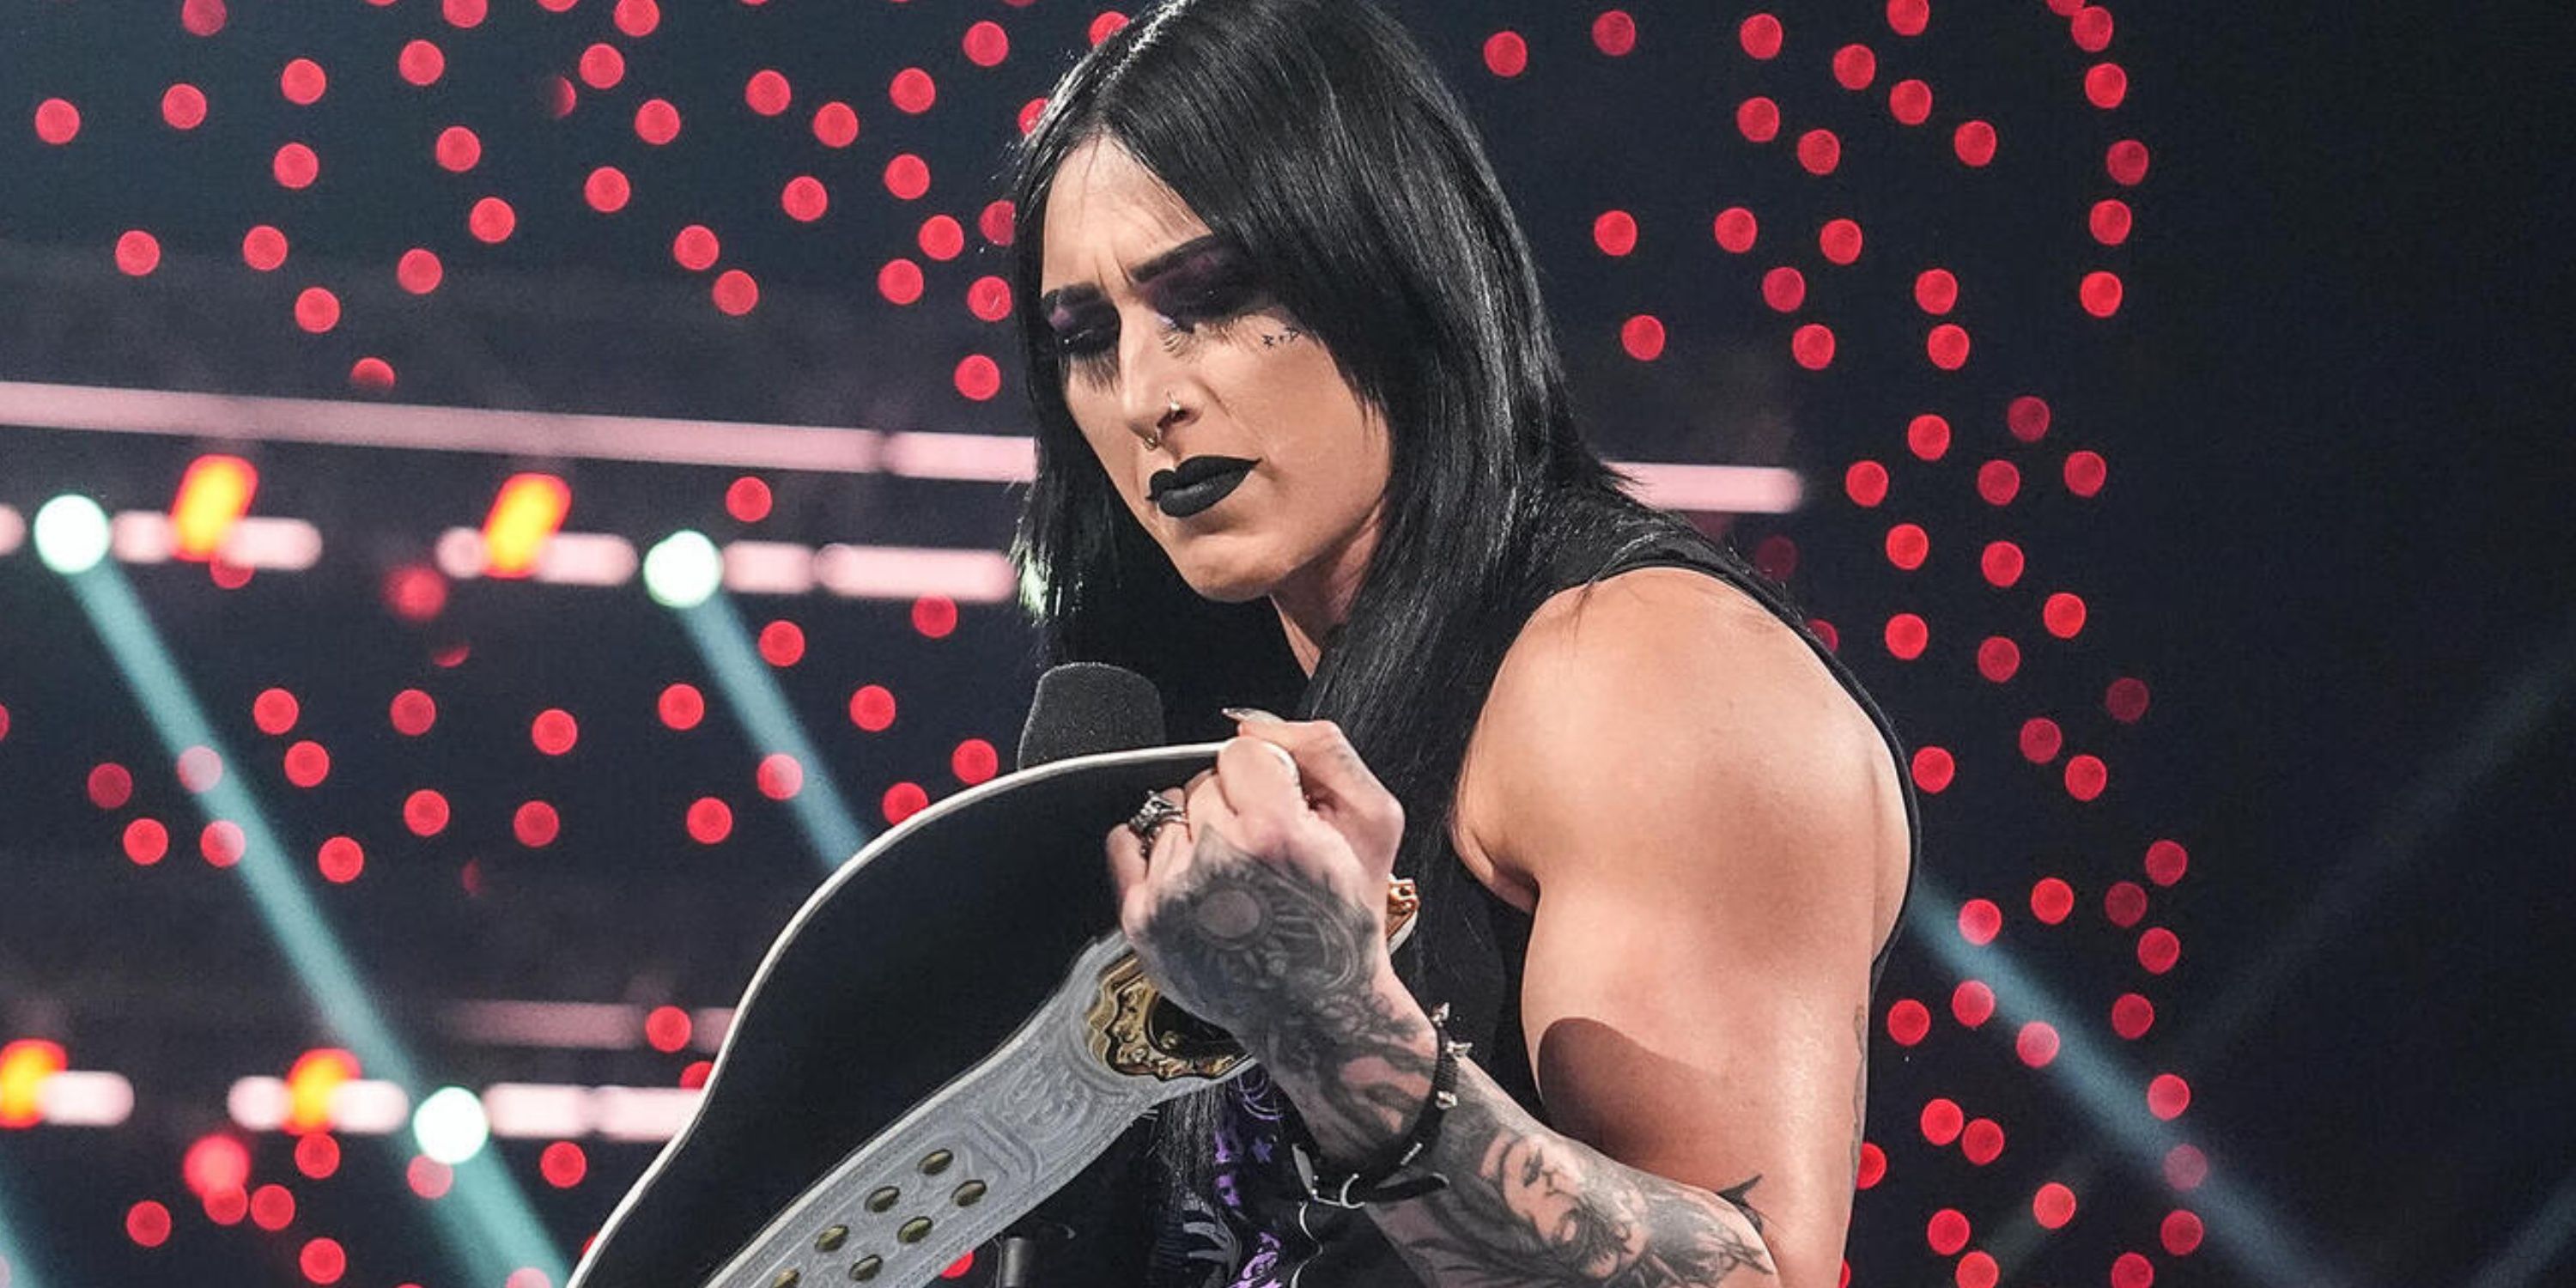 WWE's Rhea Ripley vacating her championship